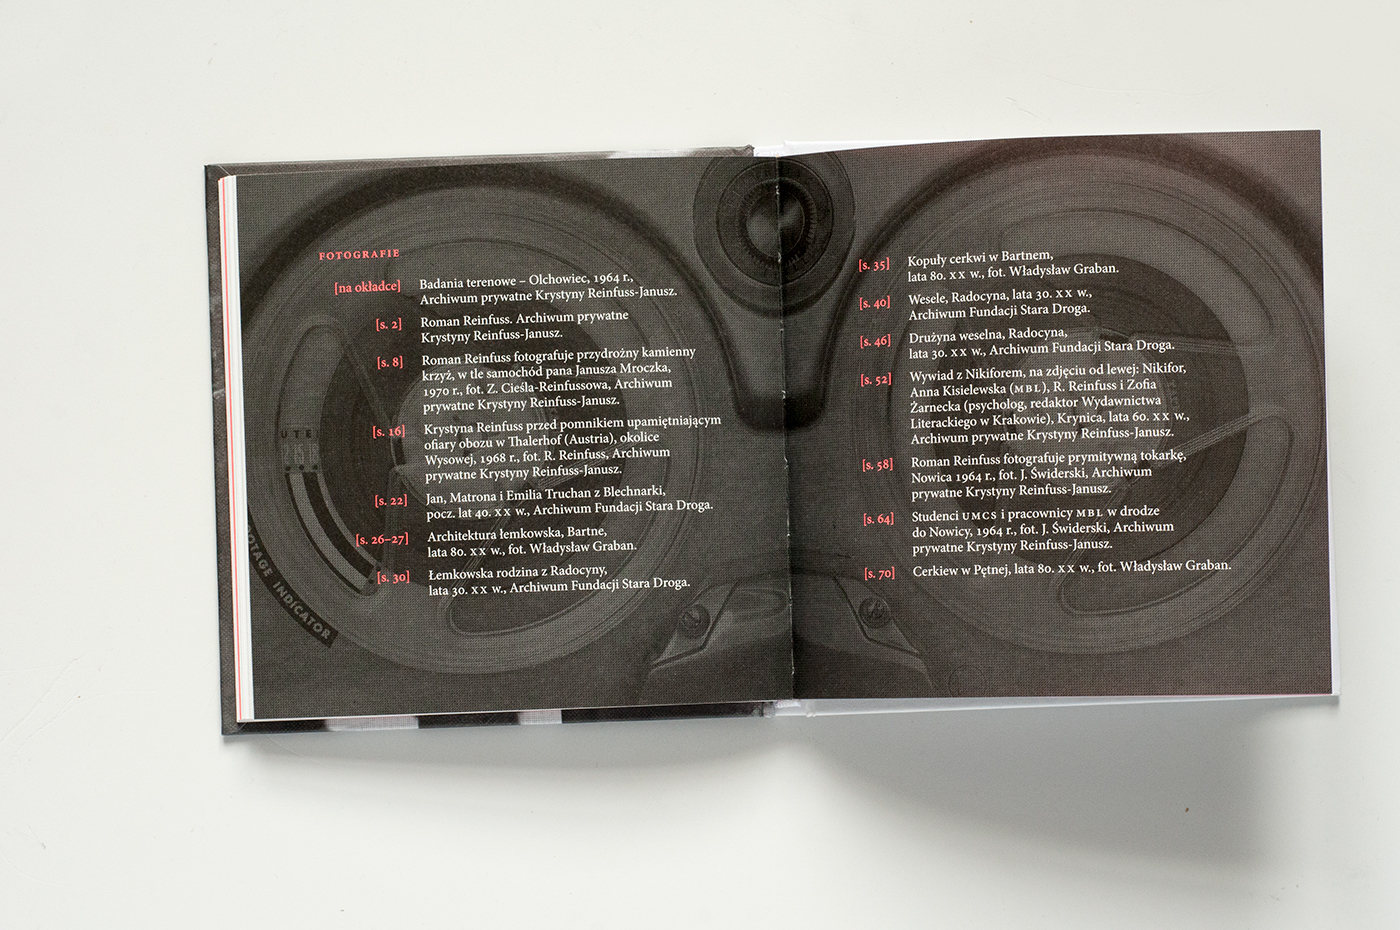 stara droga lublin janowiec cd studio format book editorial